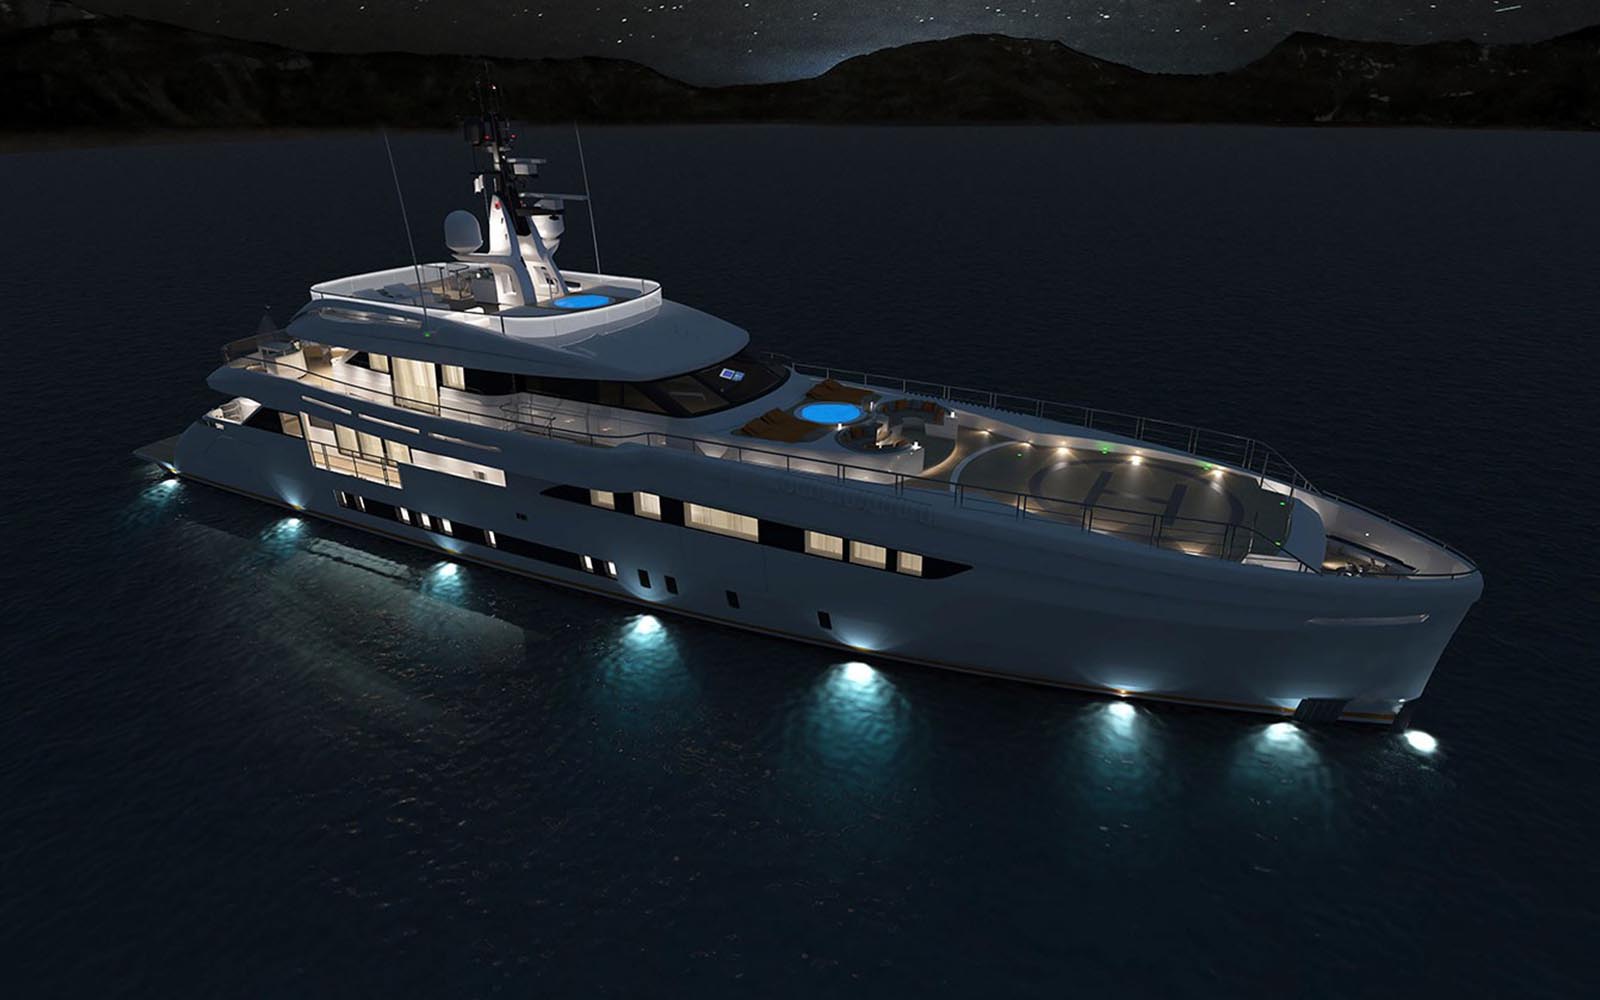 wider yachts 165 projeto cecilia - boat shopping 2